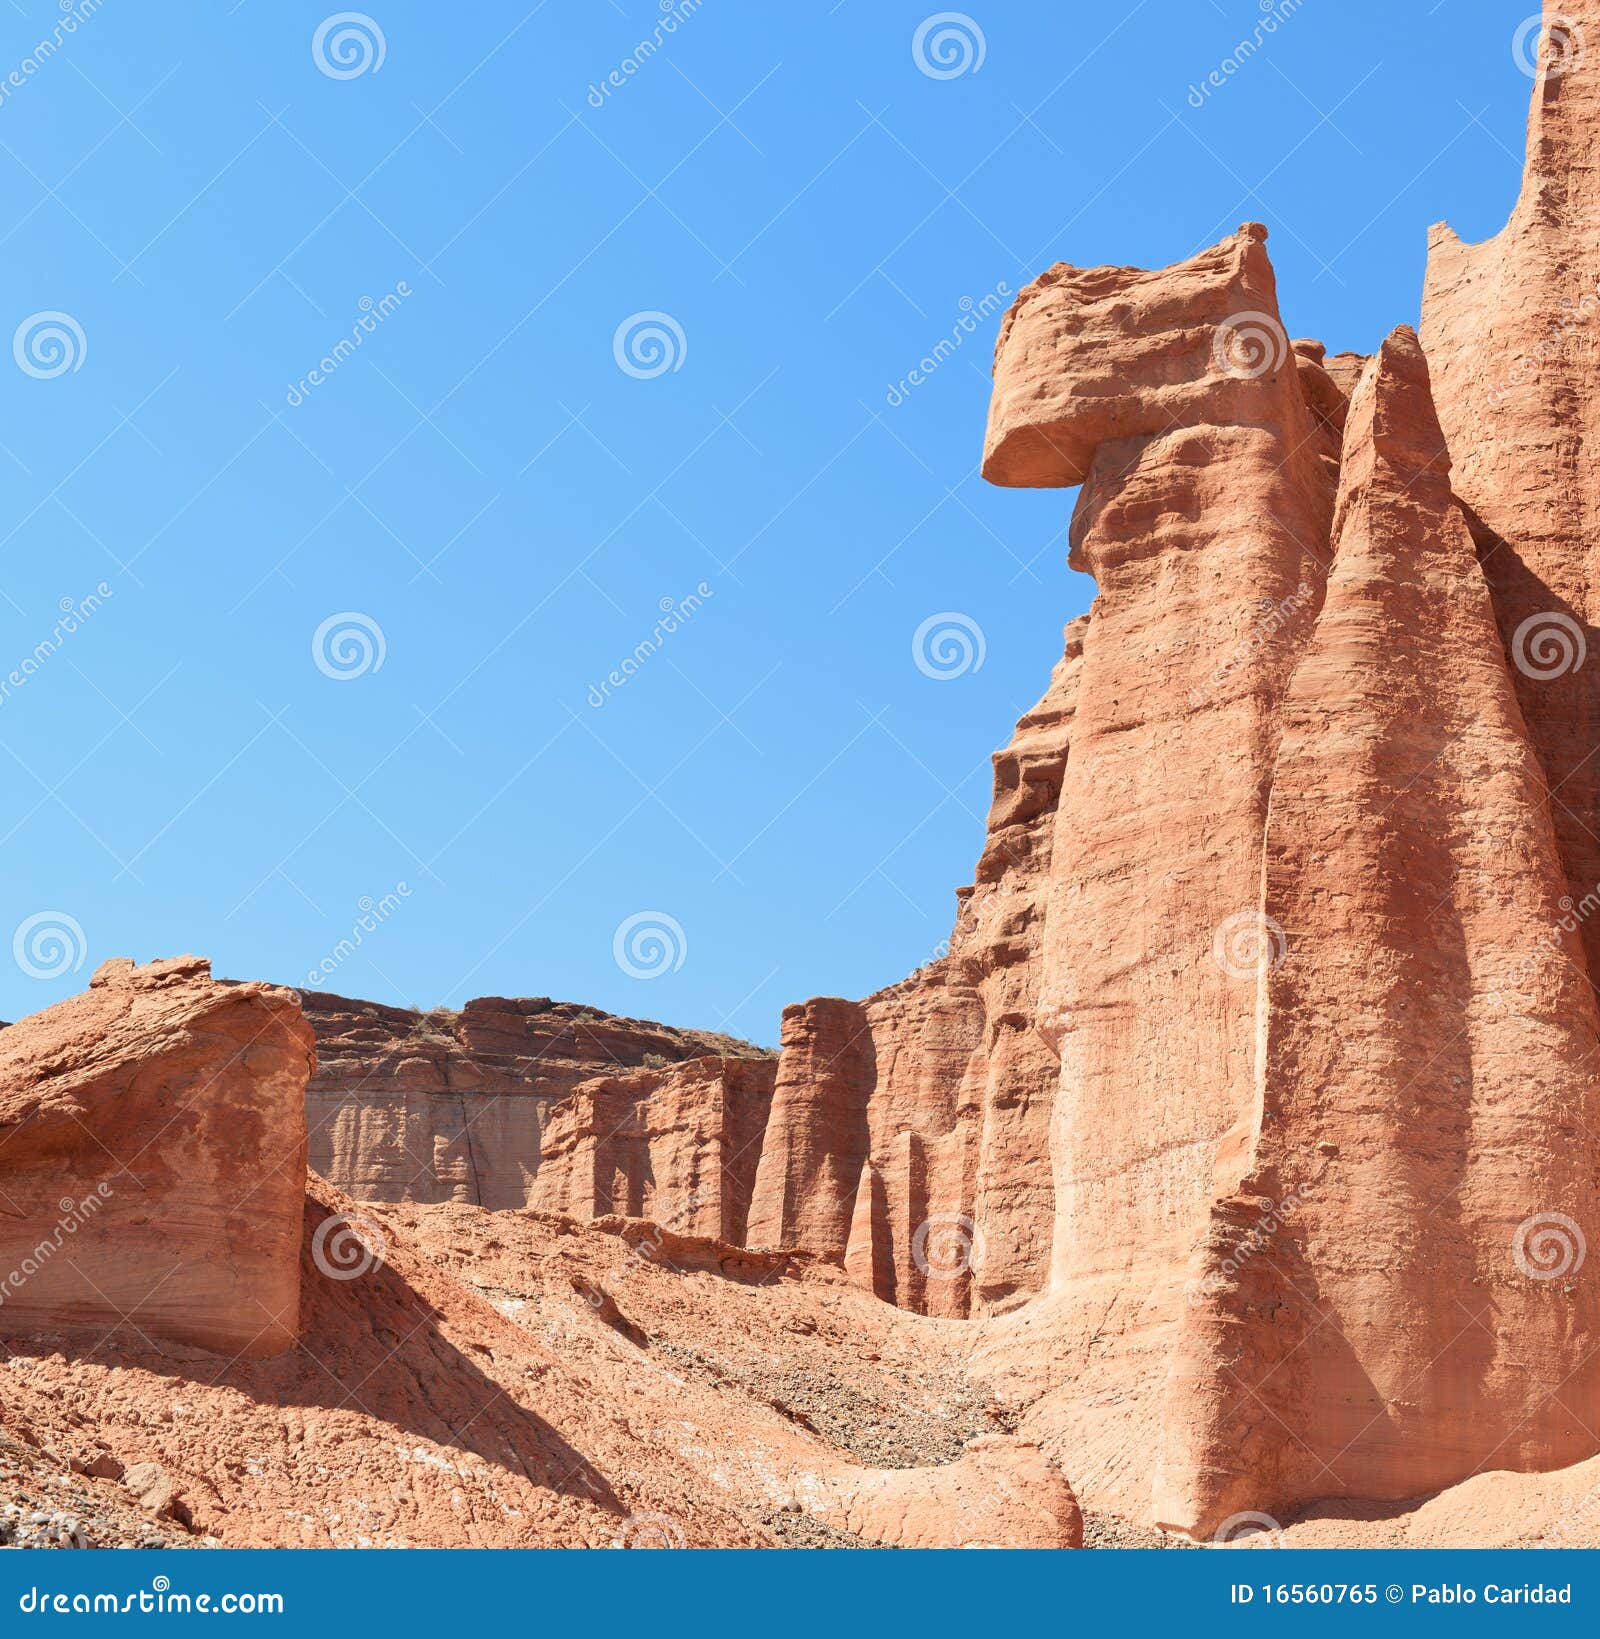 sandstone cliff in talampaya, argentina.